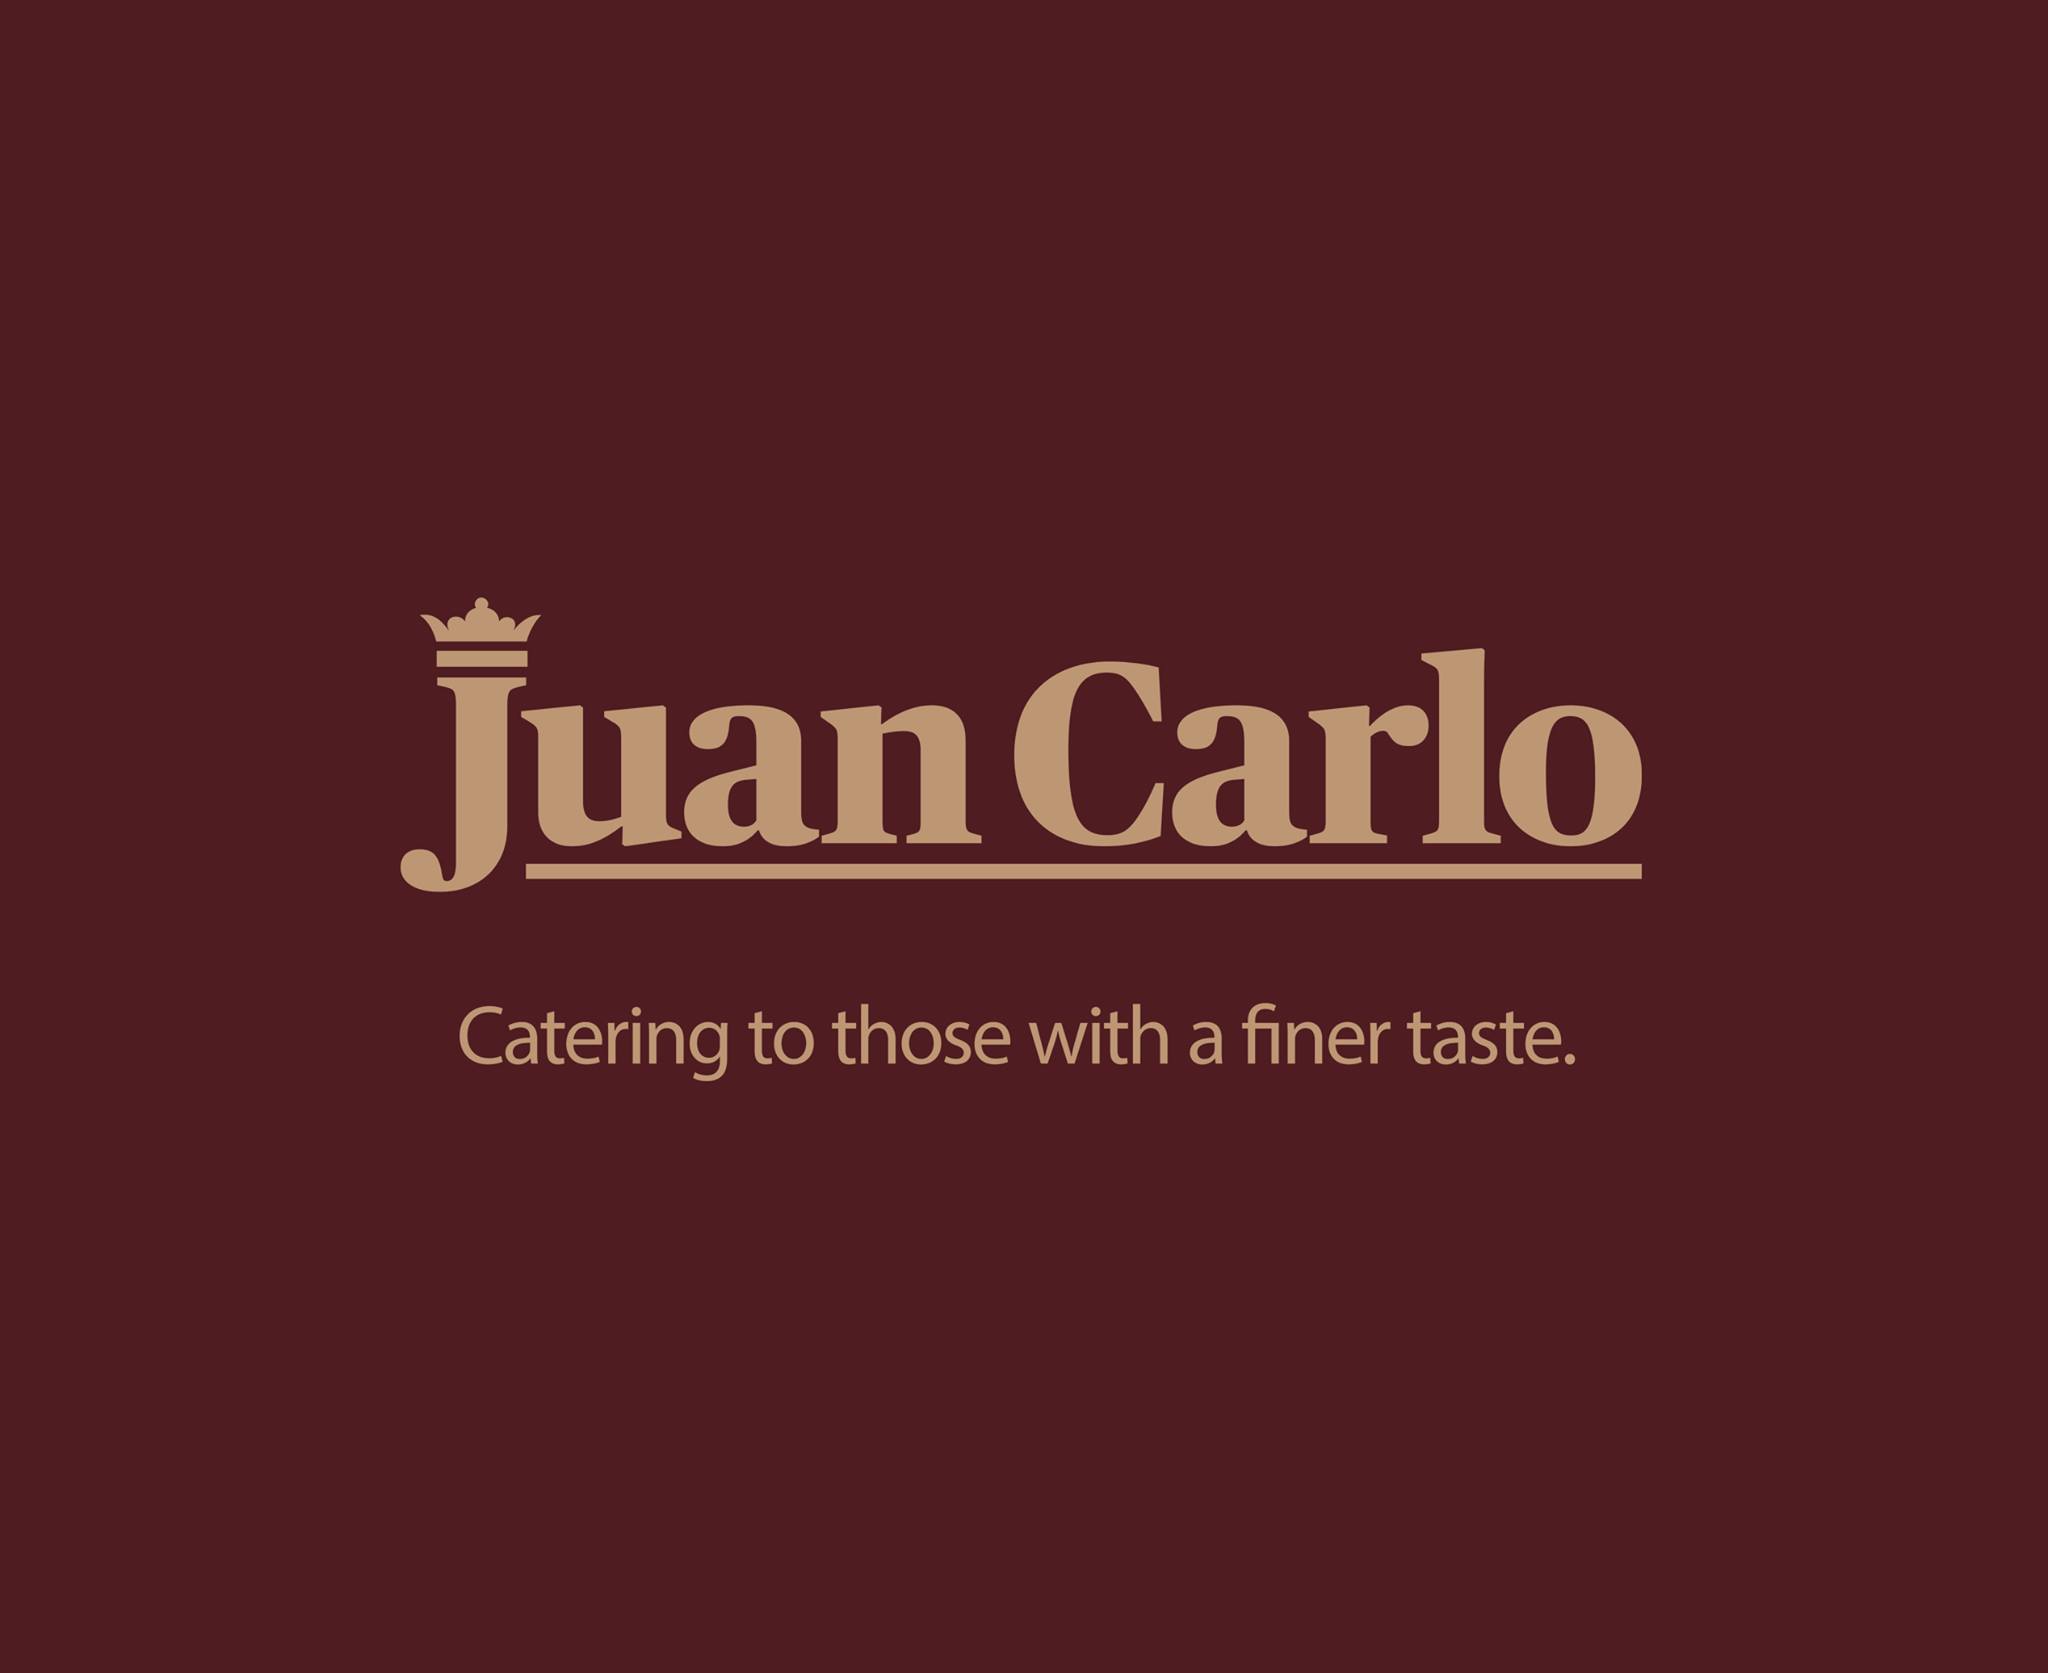 Juan Carlo The Caterer